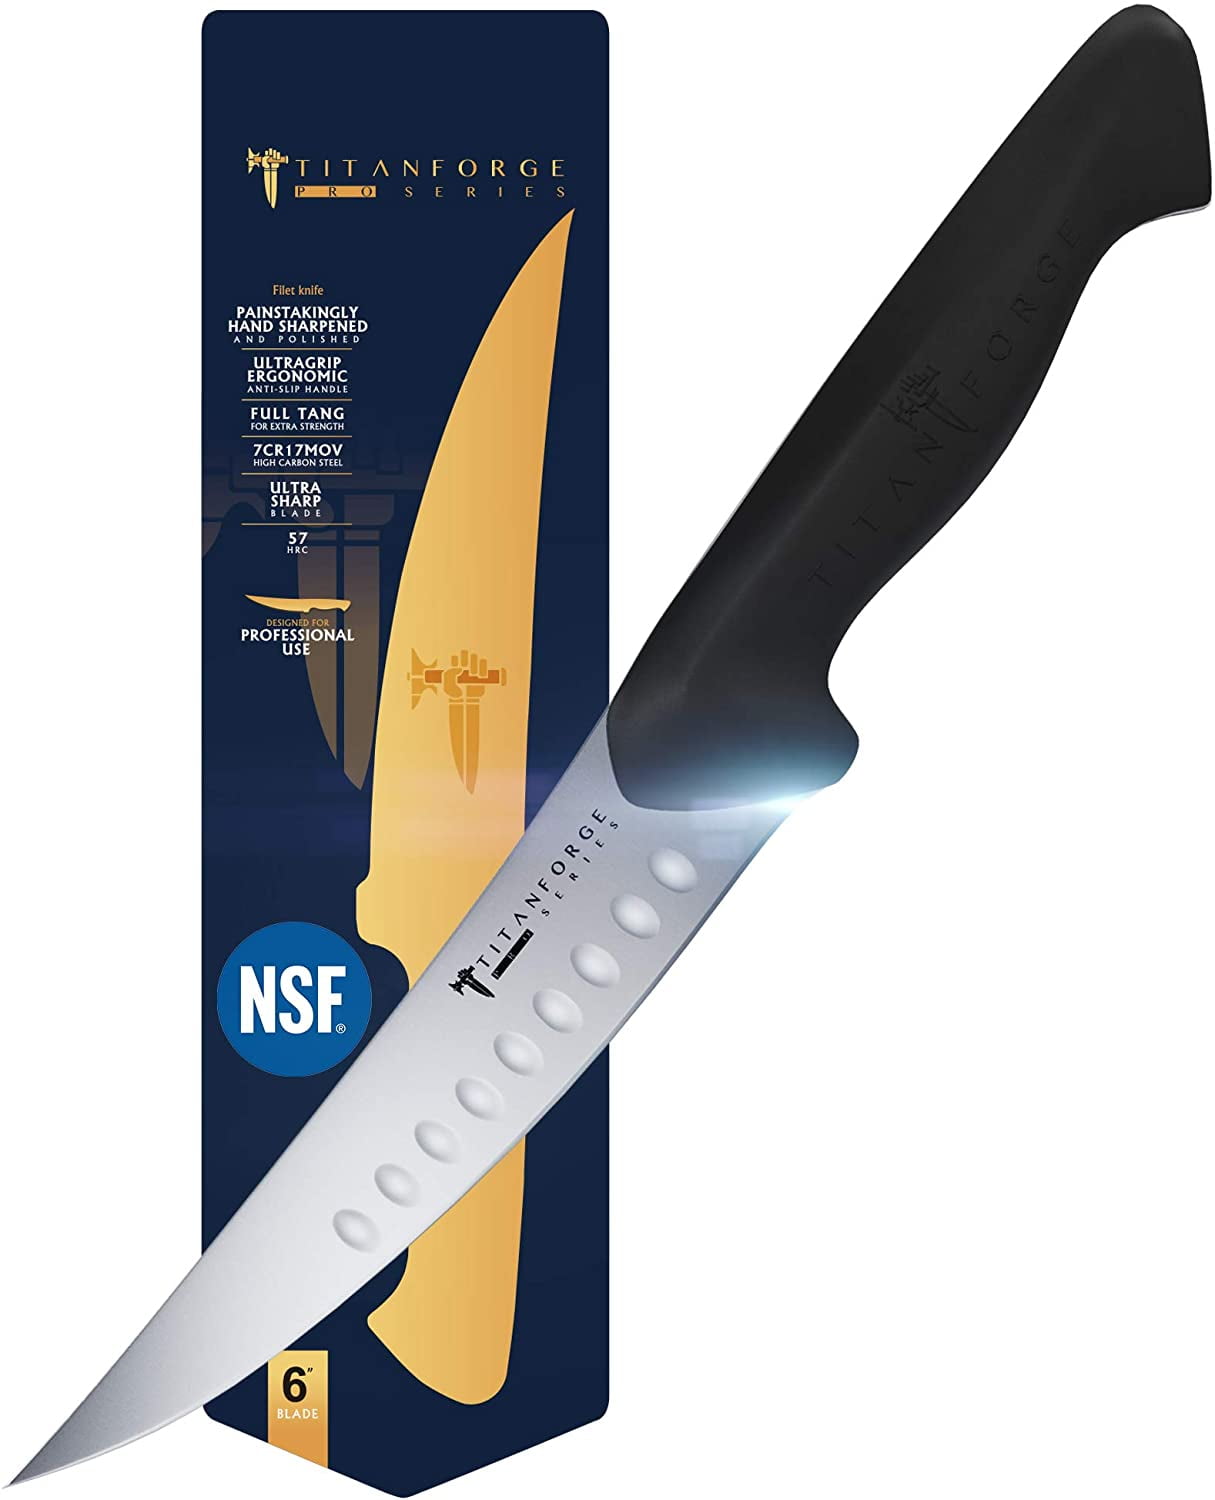 Titan Forge Fillet Knife 6 Pro Series Knives 7cr17mov High Carbon Steel Full Tang Nsf Certified Walmart Com Walmart Com